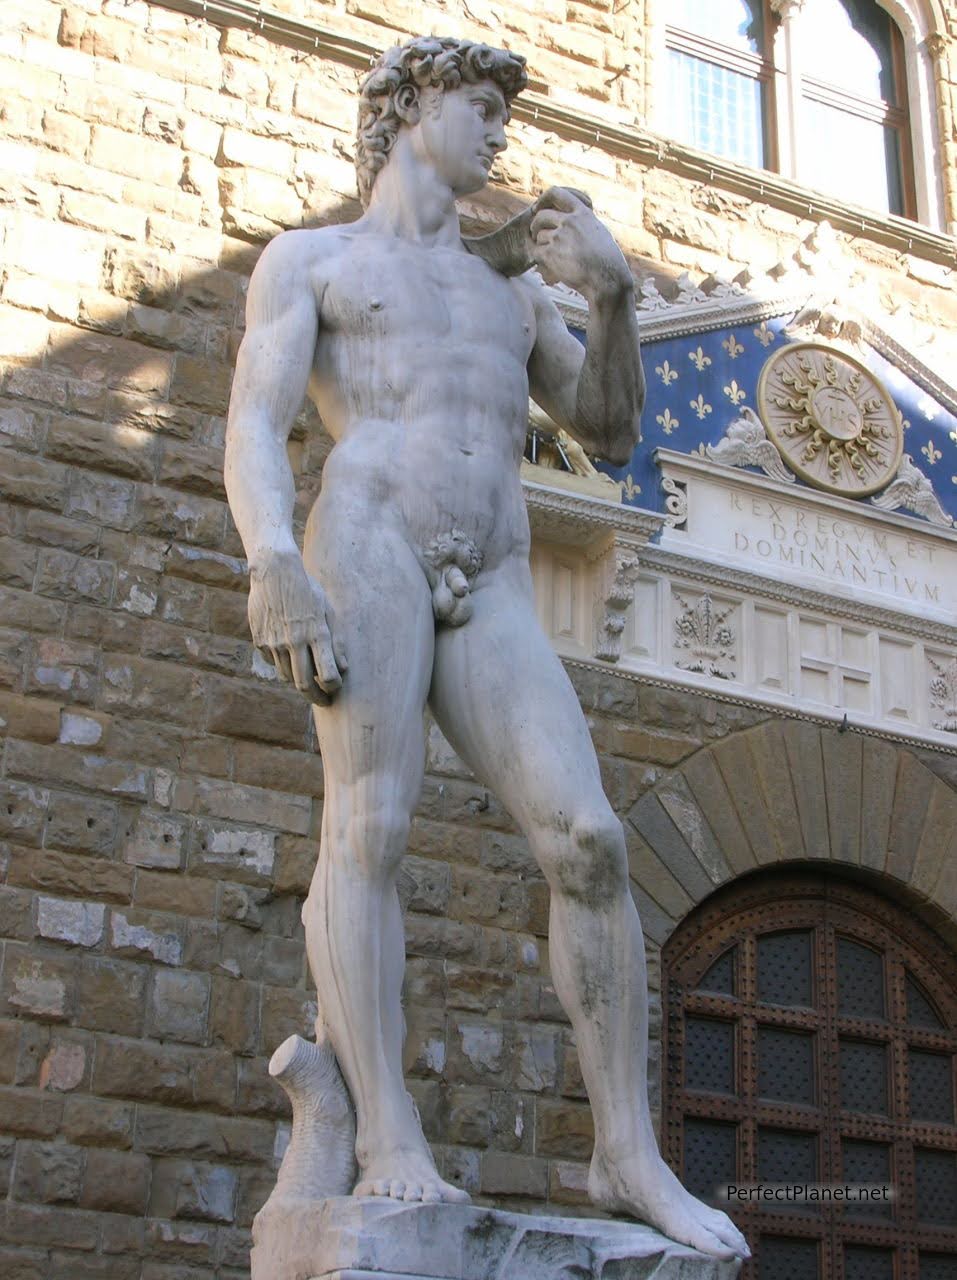 Reproduction of Michelangelo's David